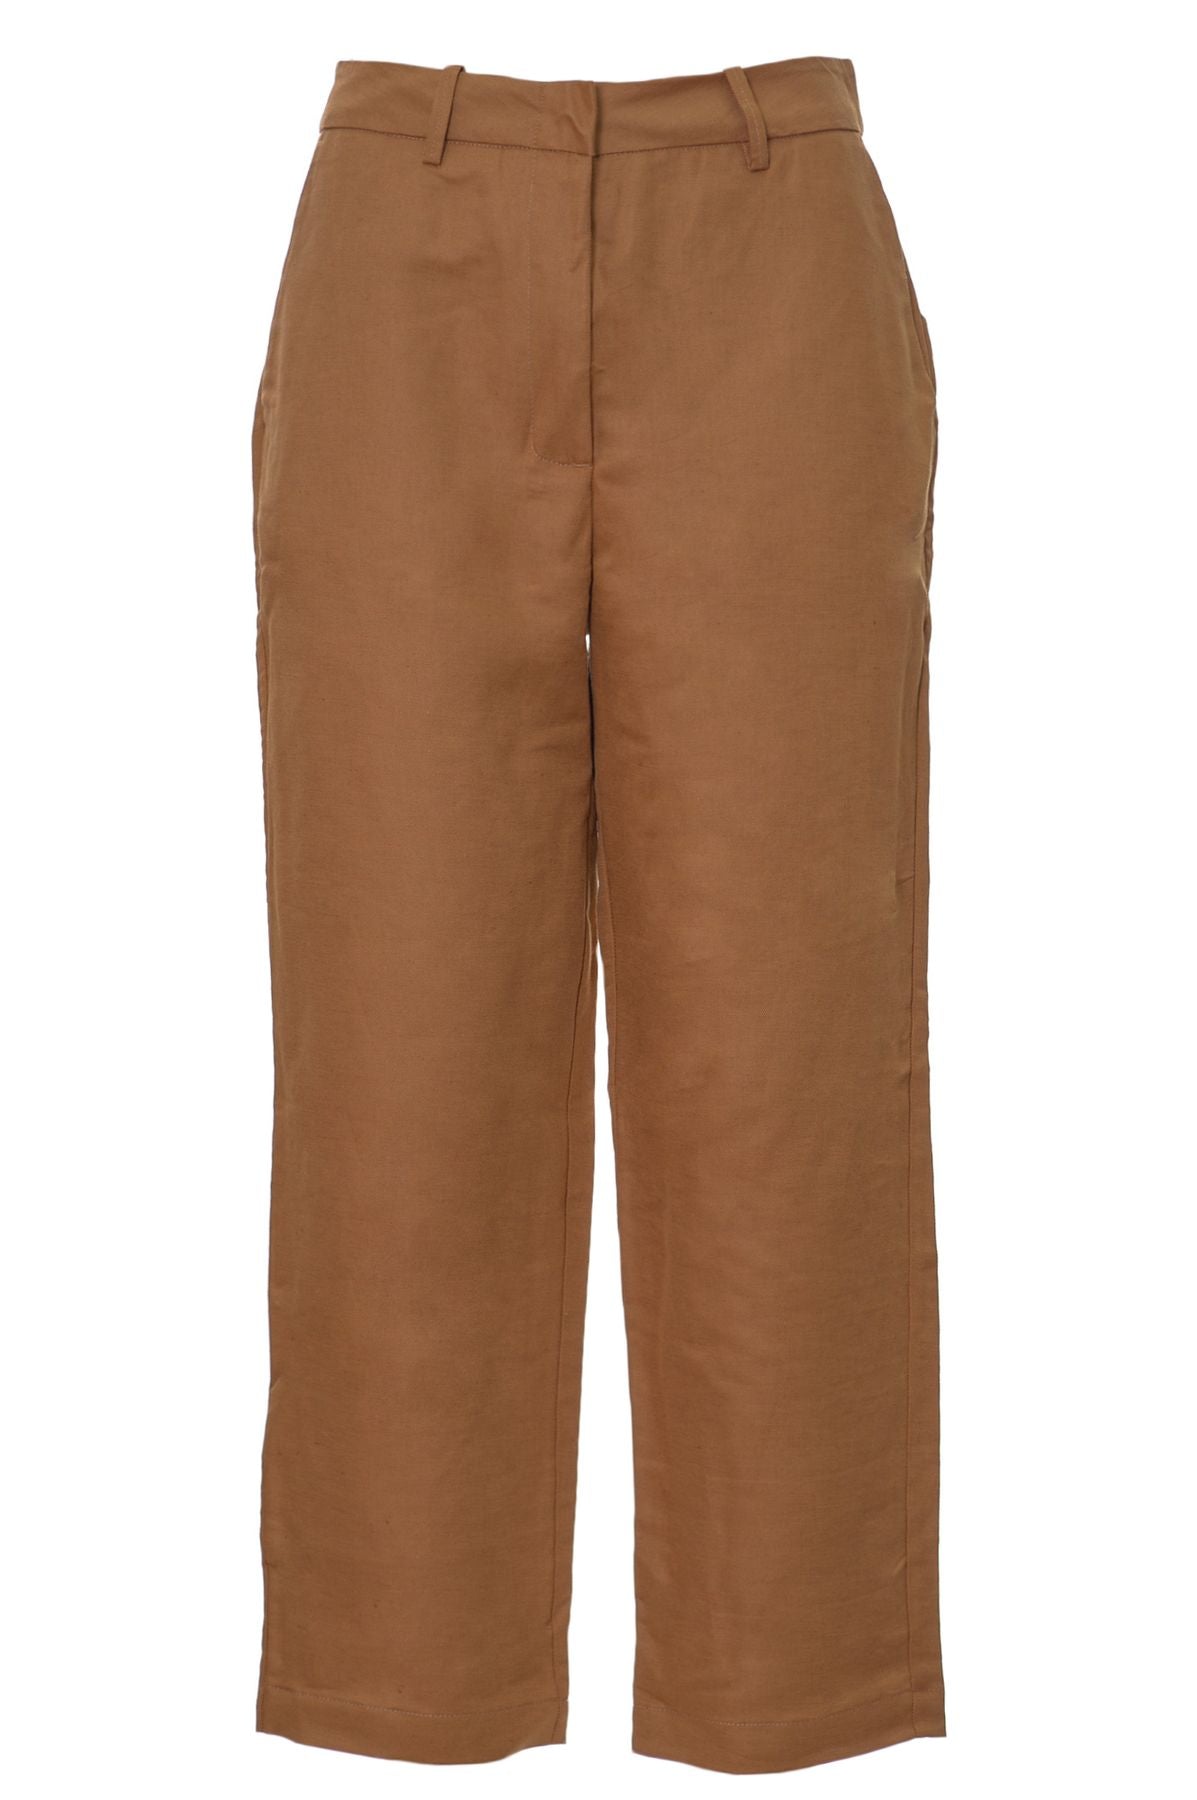 PEUTEREY Spring/Summer Linen Trousers